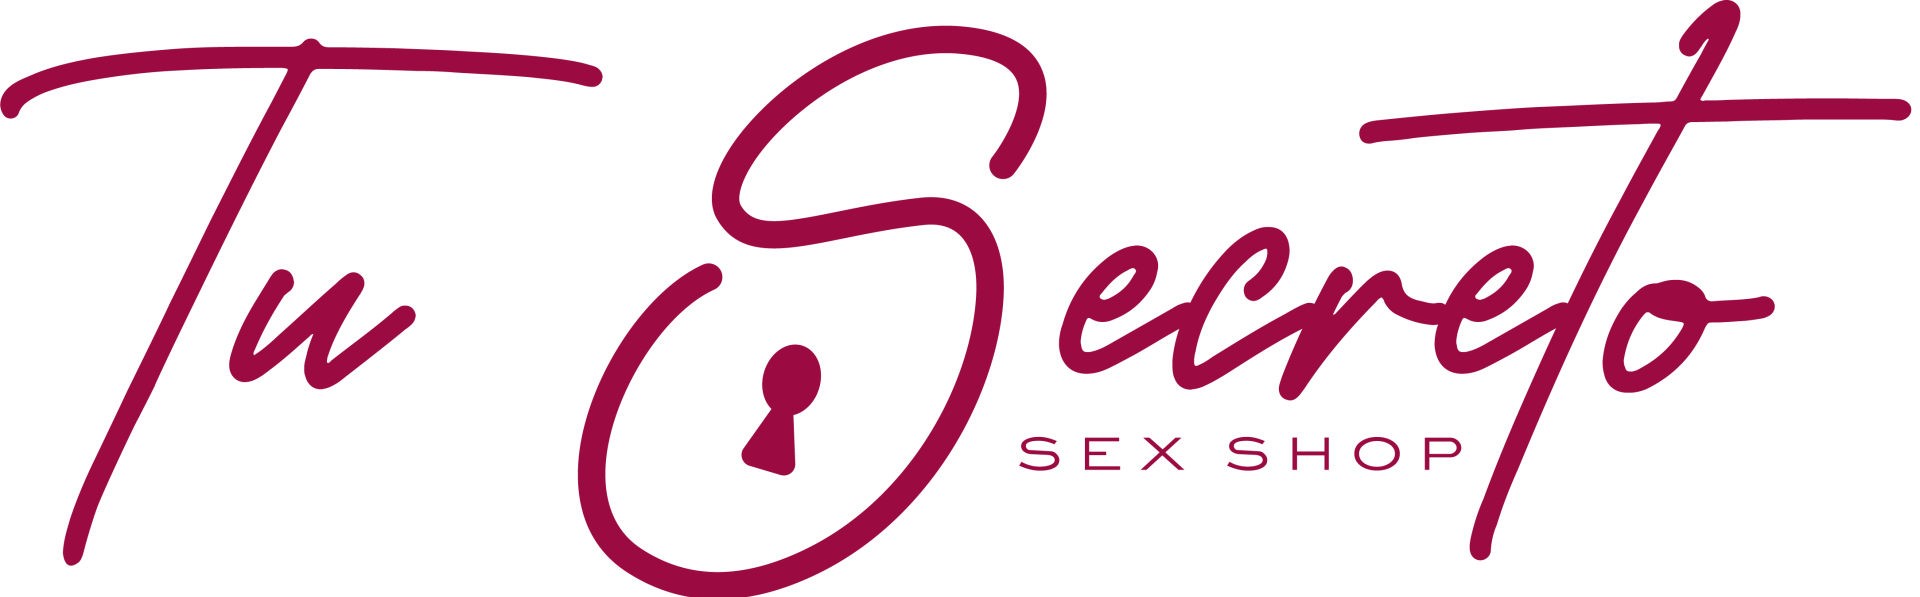 Tu Secreto Sex Shop